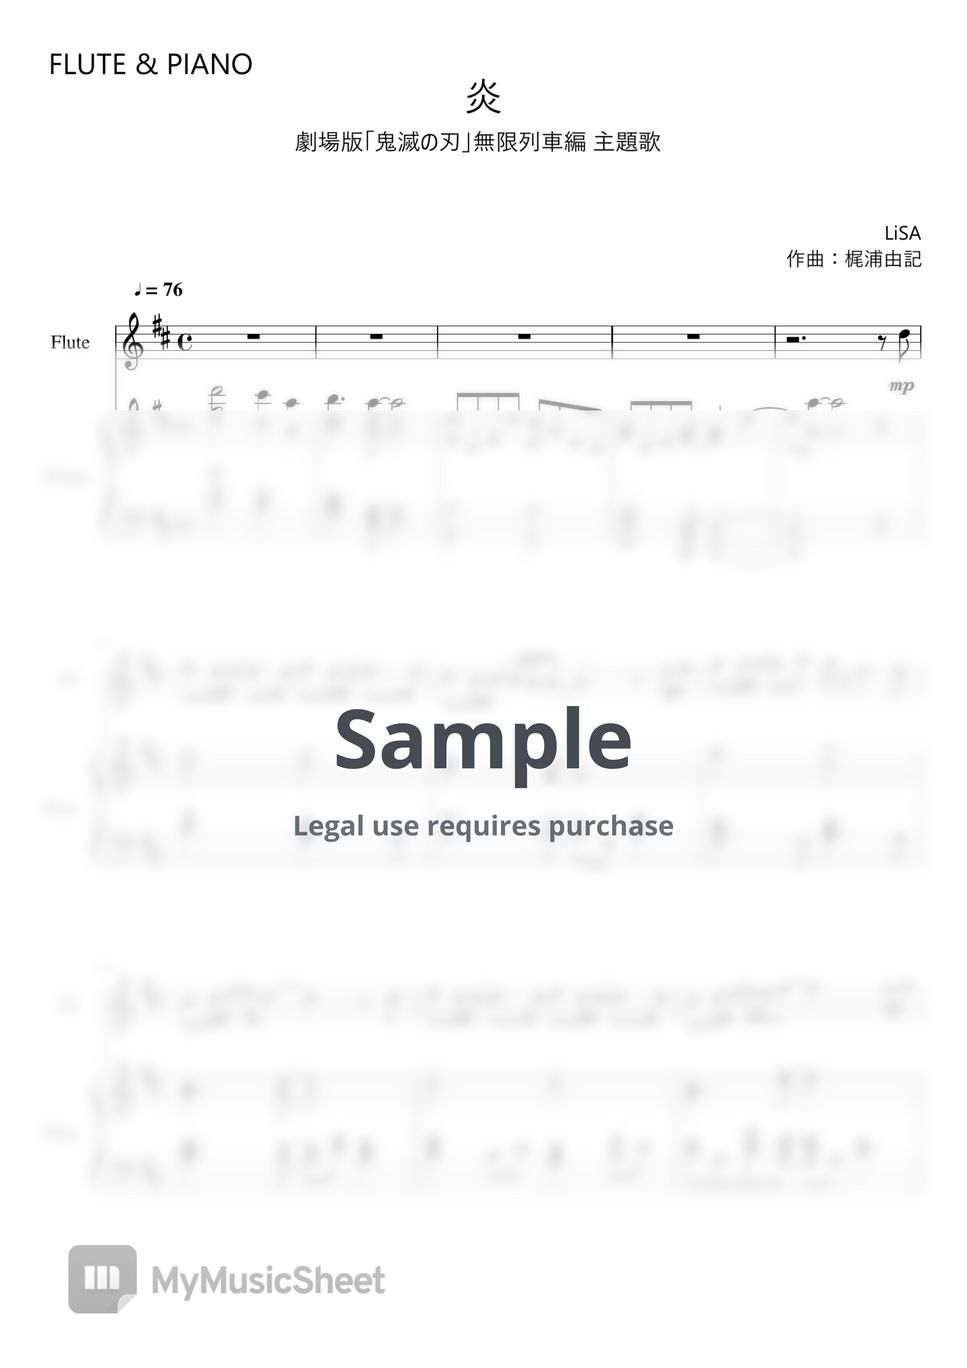 LiSA - 炎 / LiSA - Homura /  Kimetsu no Yaiba (Flute&Piano) by PiaFlu / ピアフル Piano&Flute